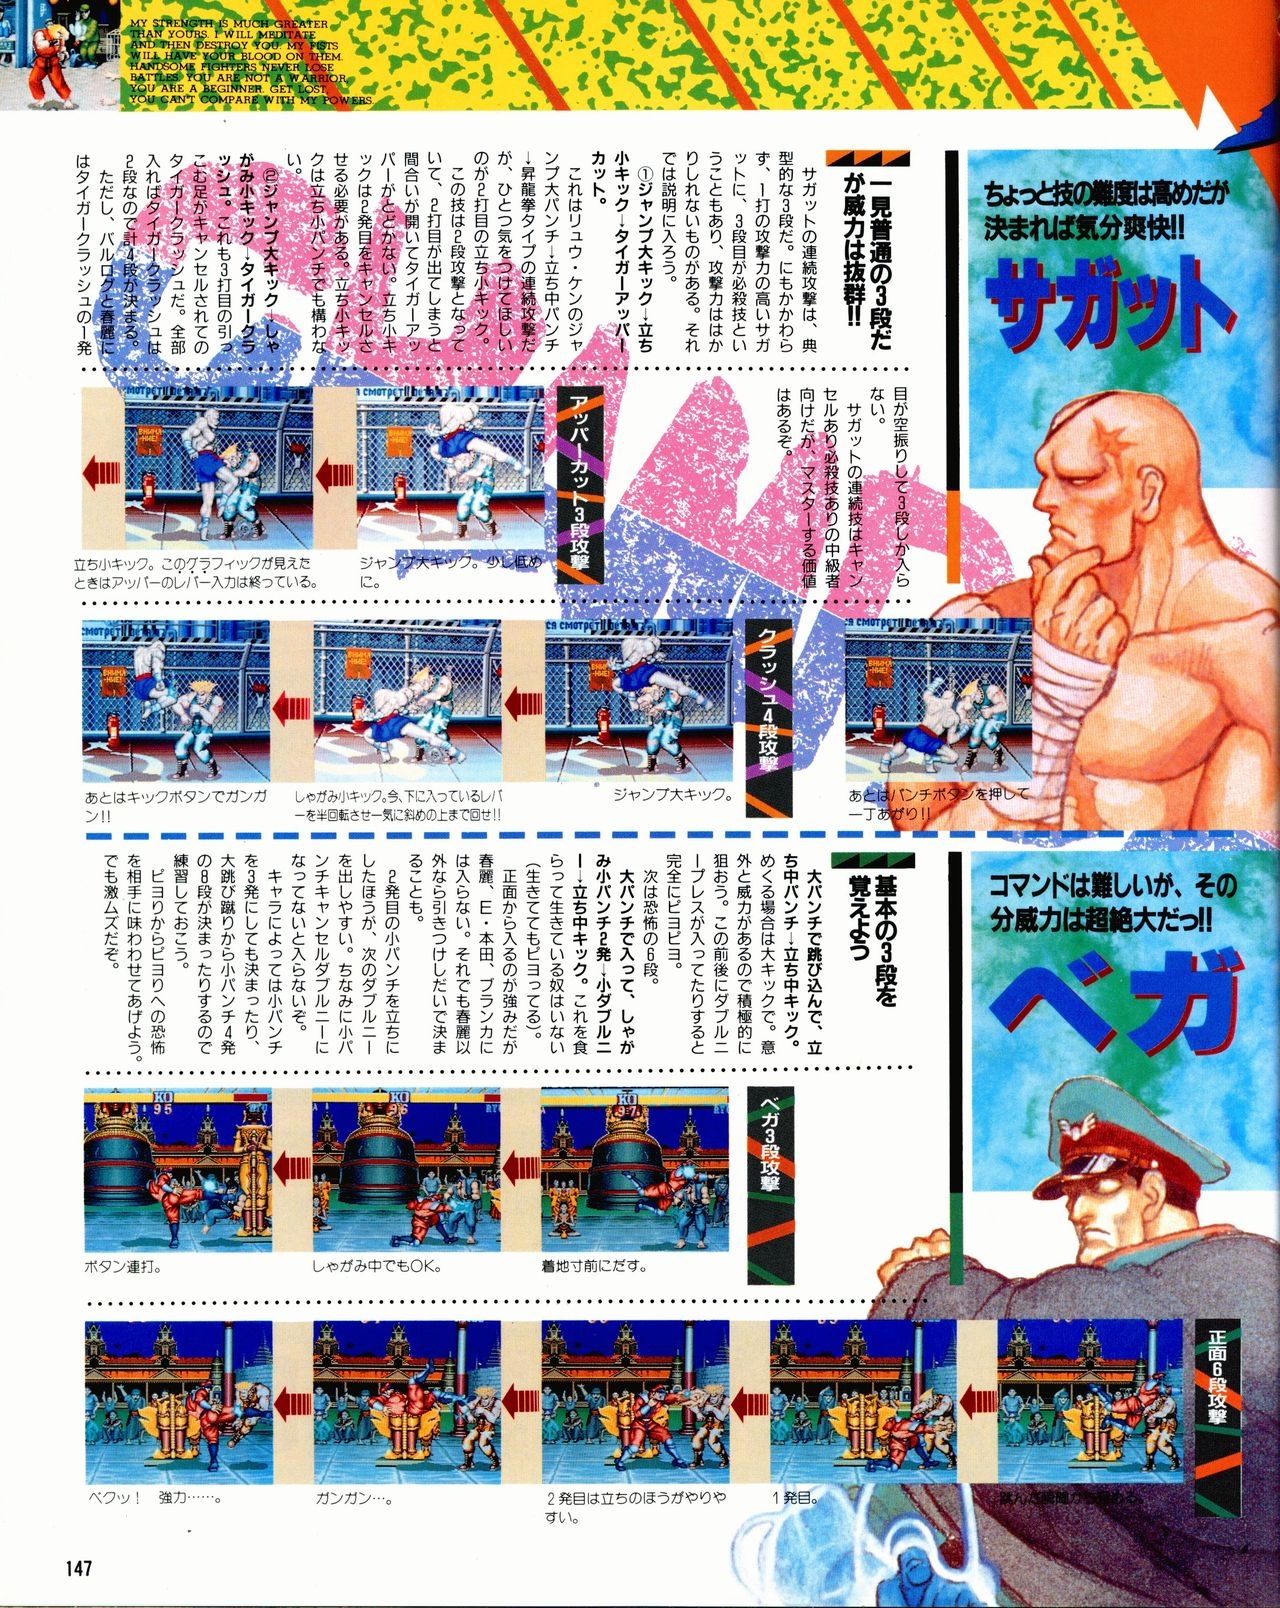 Street Fighter II Dash - Gamest special issue 77 148